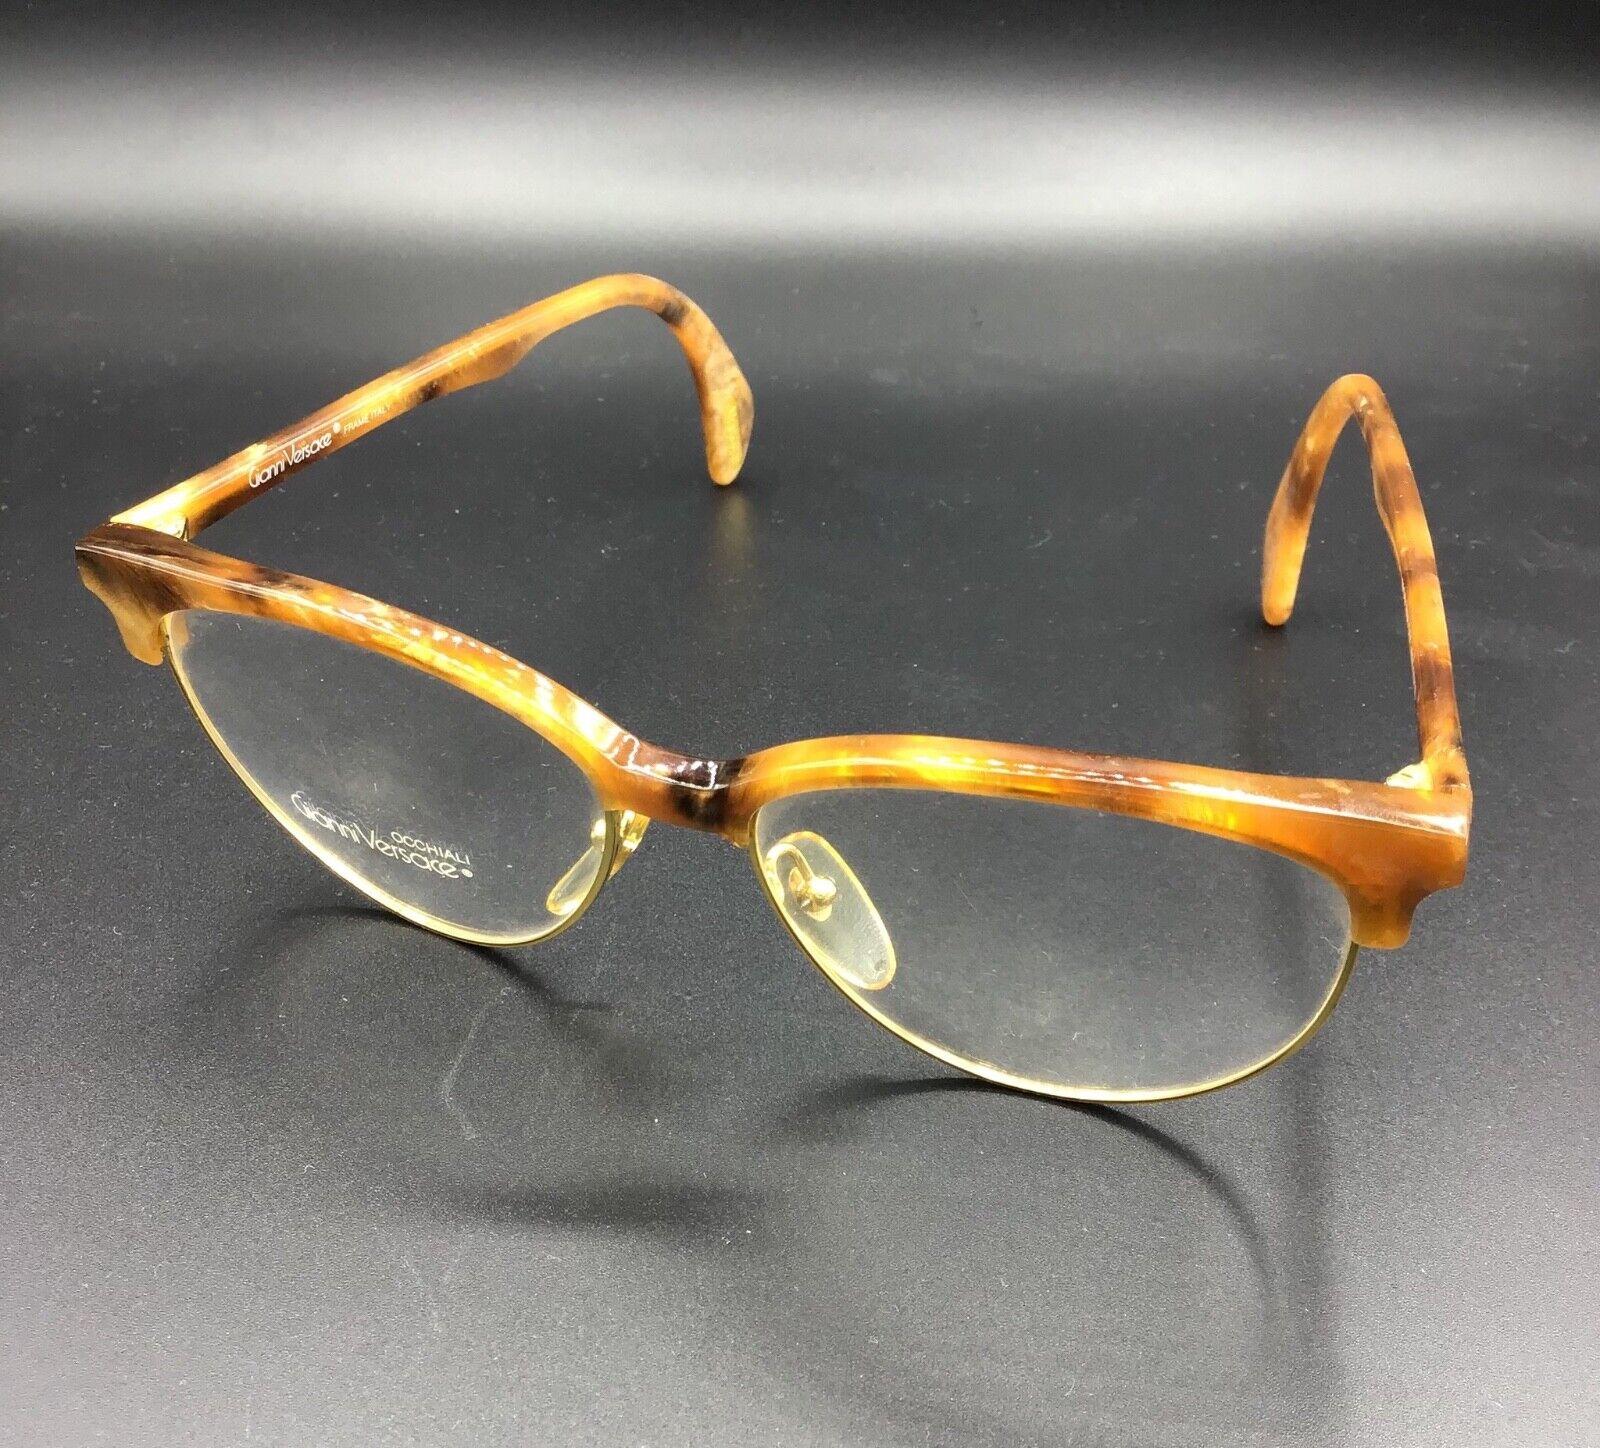 Gianni Versace occhiale vintage Eyewear frame model 468 brillen lunettes glasses